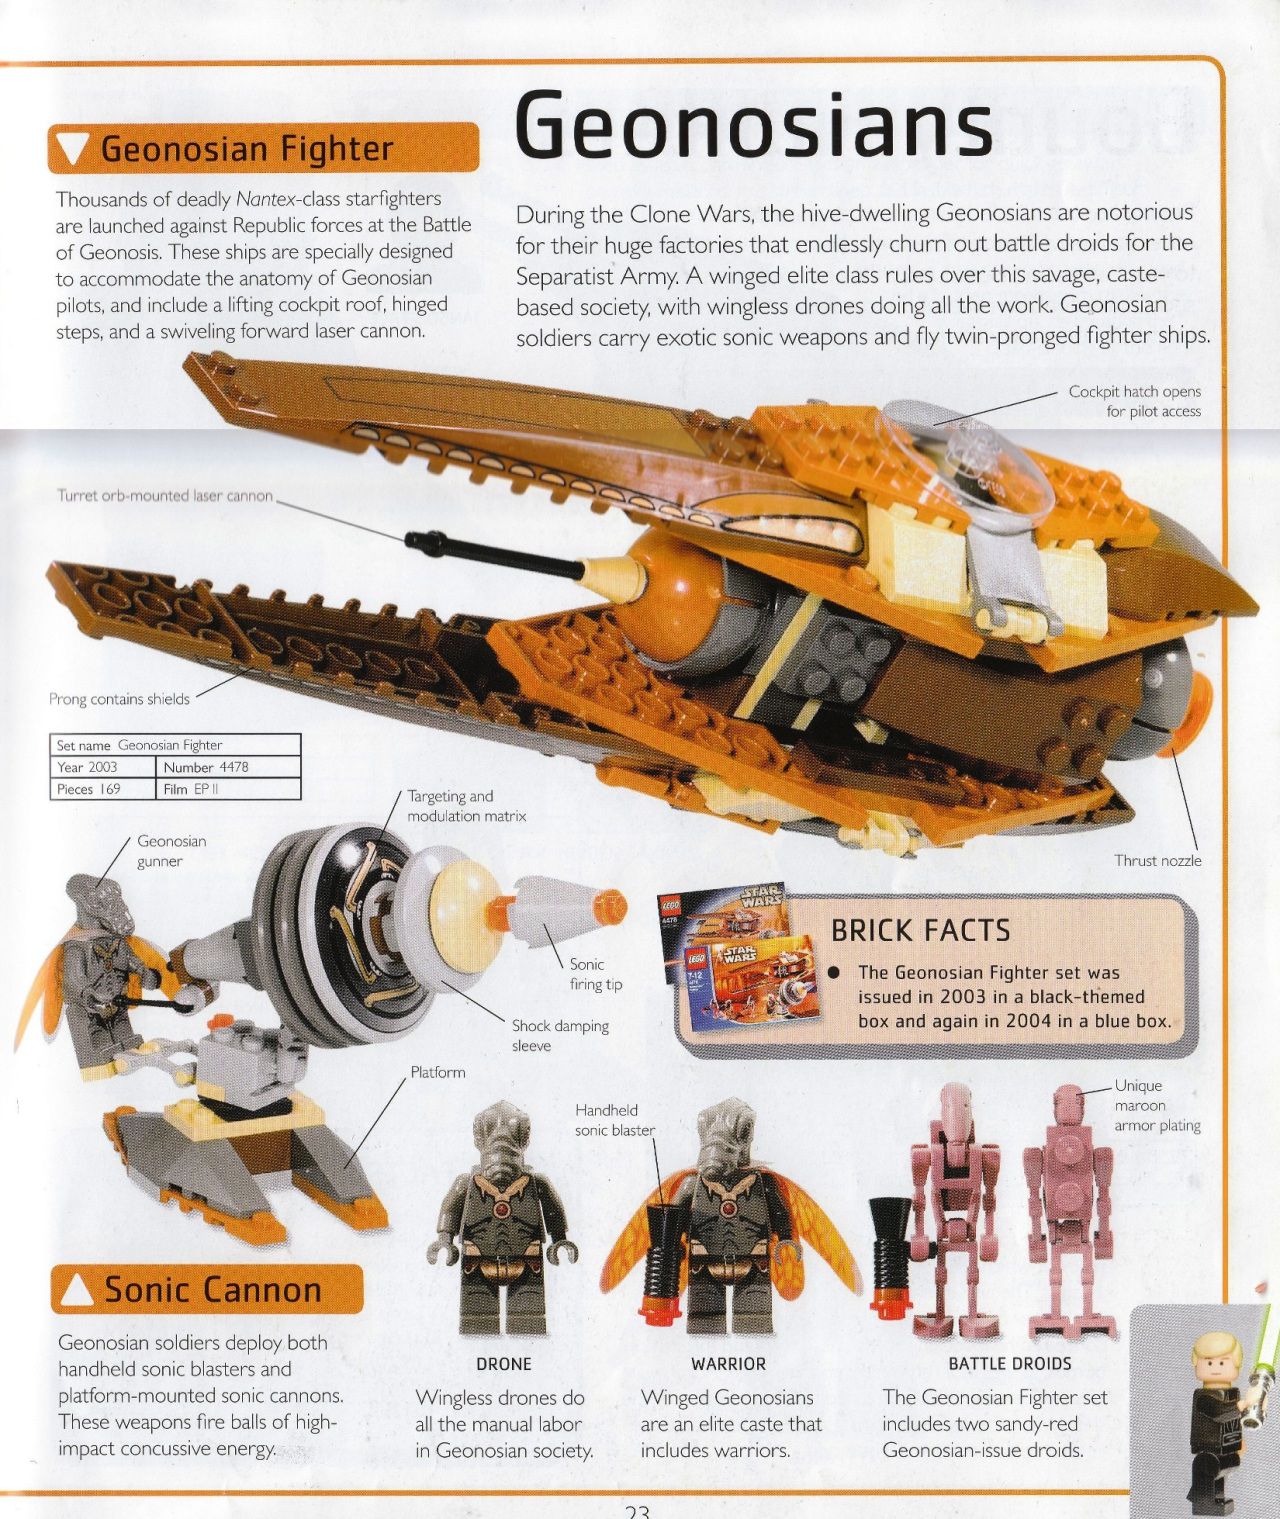 Lego Star Wars The Visual Dictionary 2009 Lego Star Wars The Visual Dictionary 2009 24